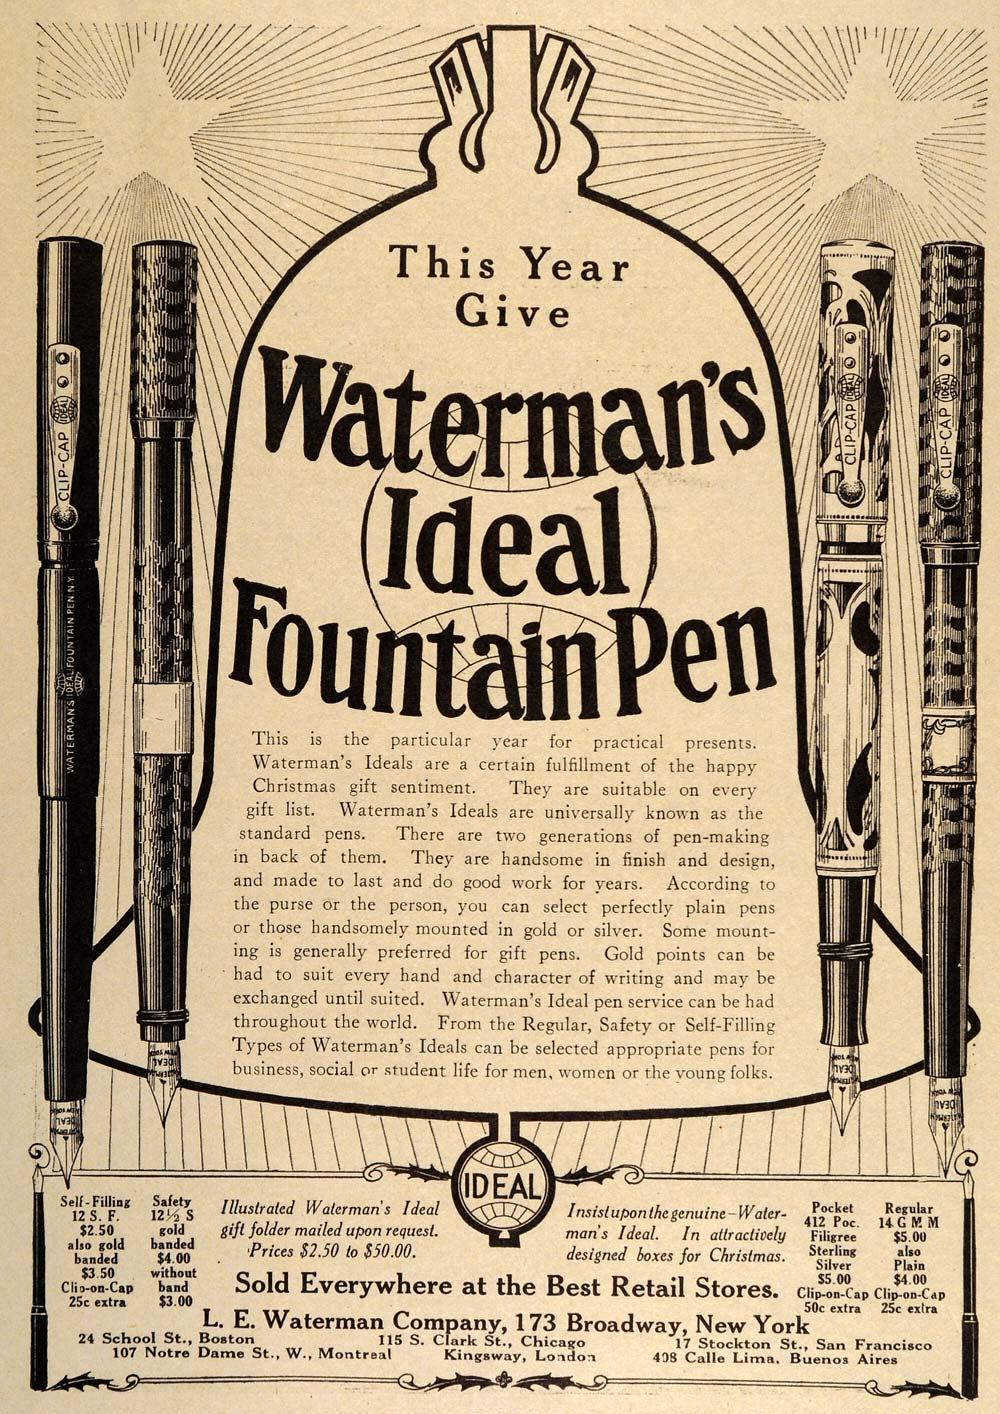 1914 Vintage Ad L.E. Waterman Ideal Fountain Pen Pocket - ORIGINAL OLD7